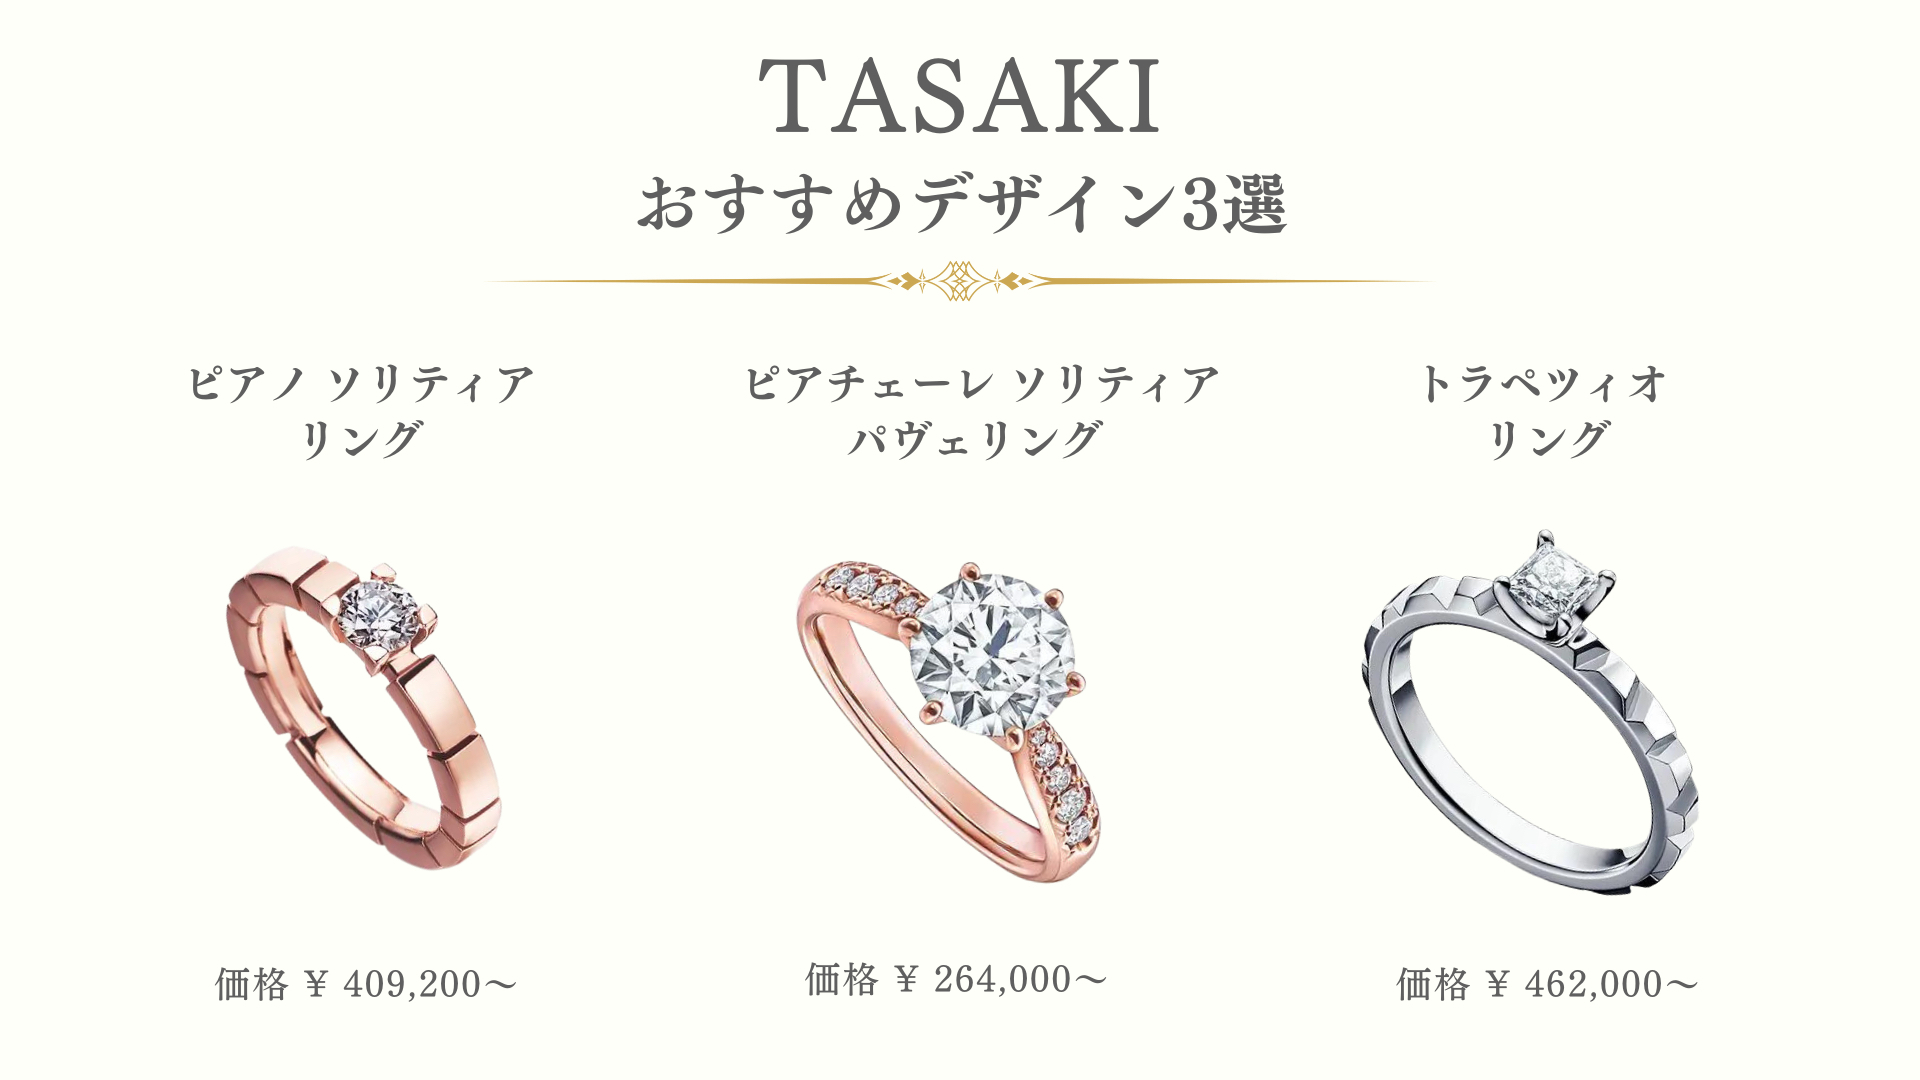 TASAKIのおすすめデザインを紹介します。